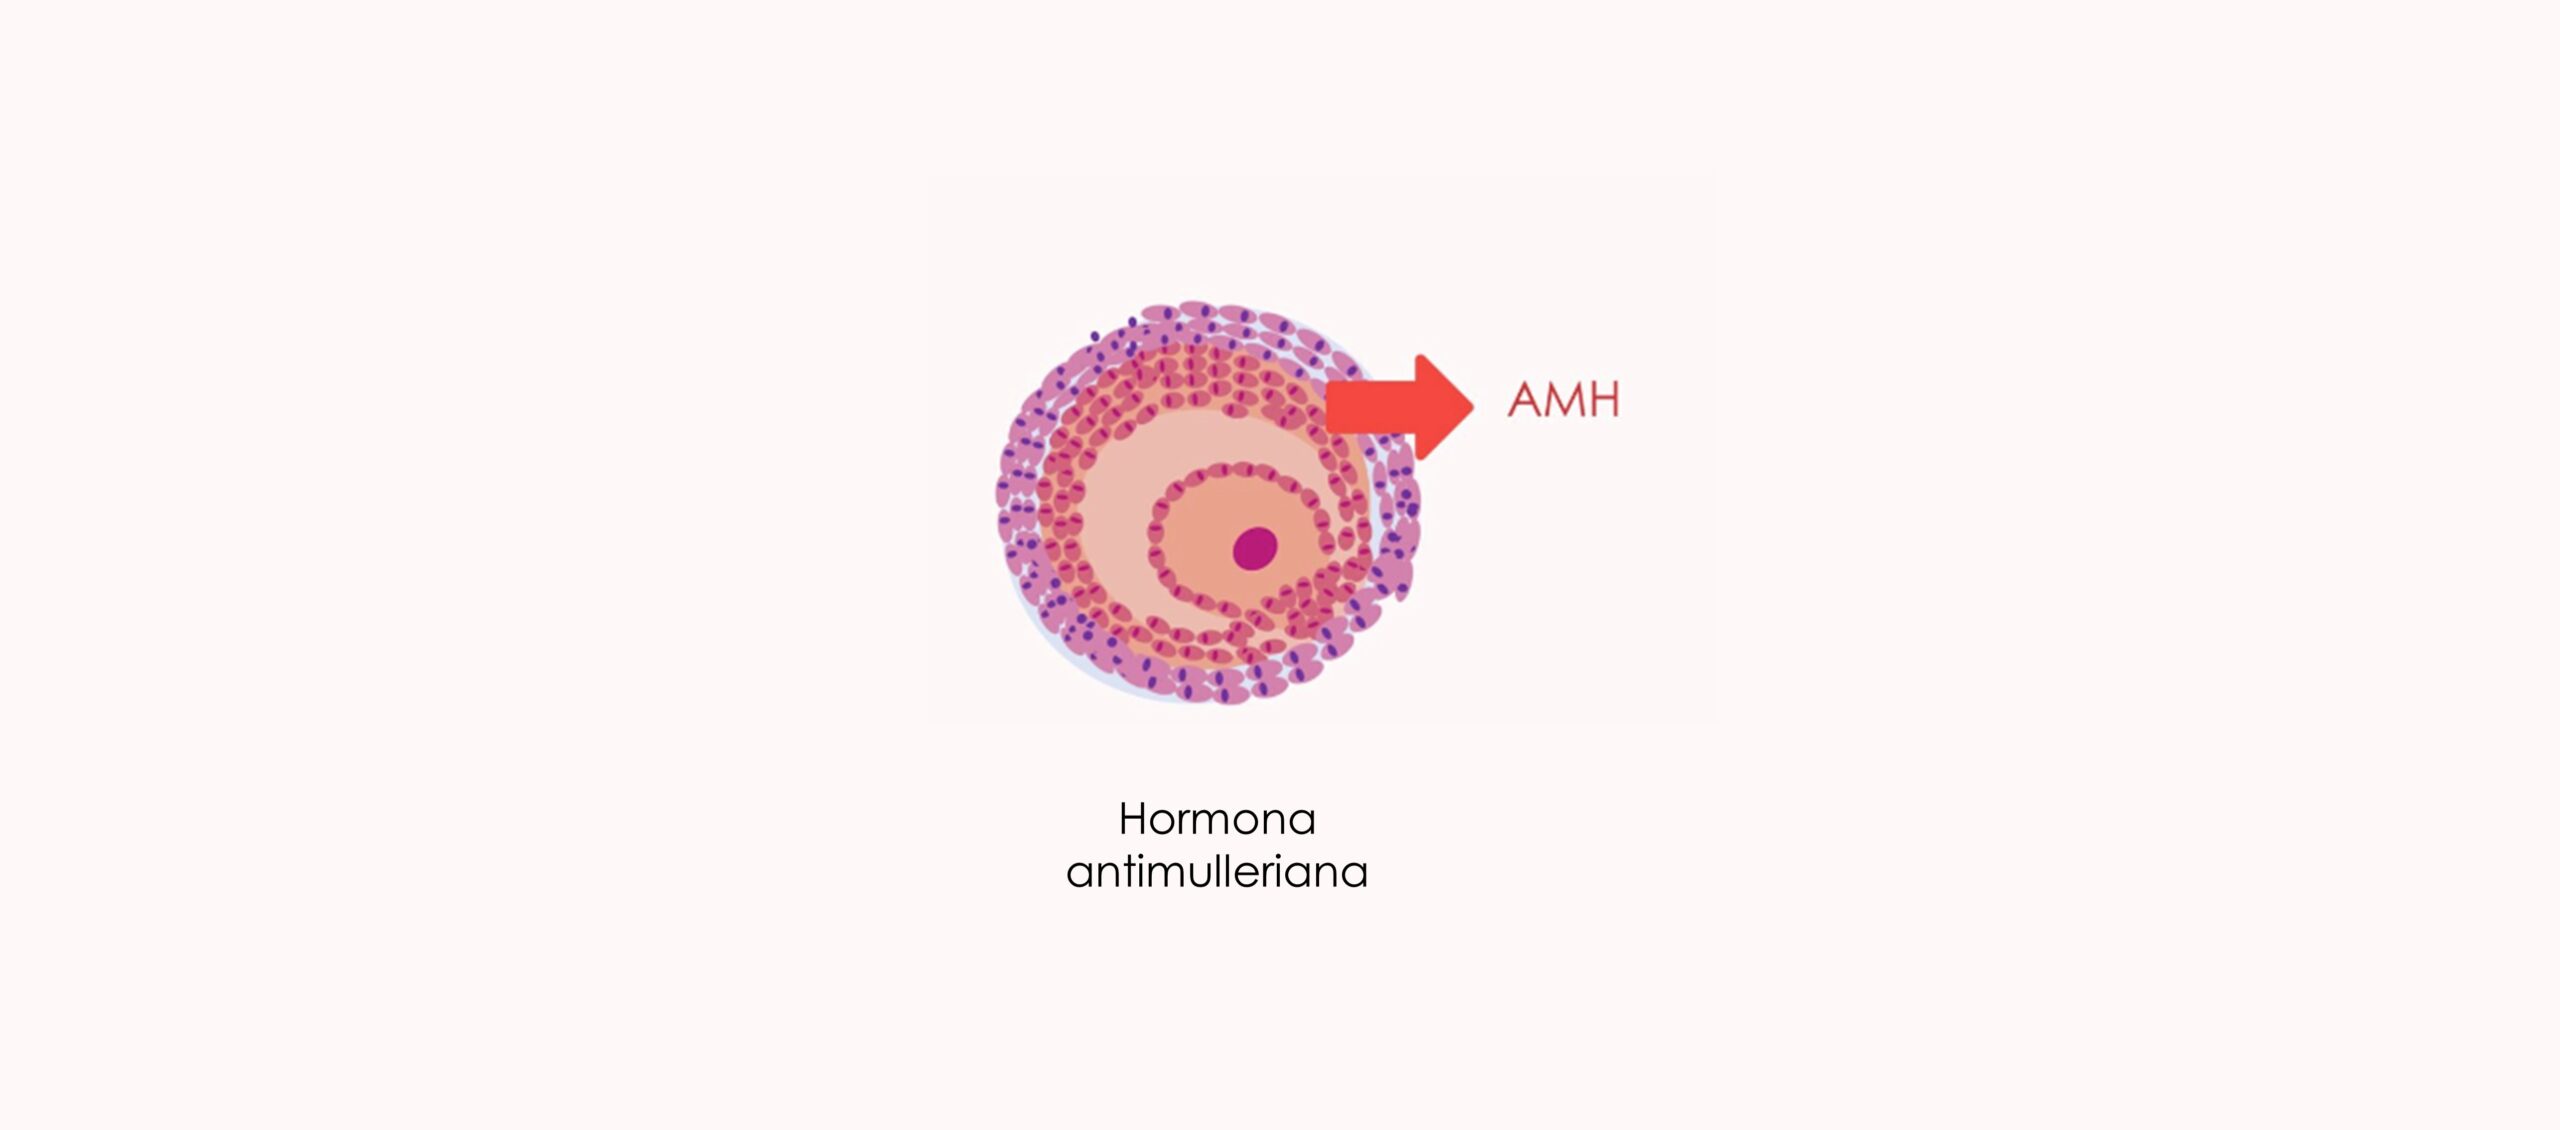 Hormona antimulleriana para medir la reserva ovárica